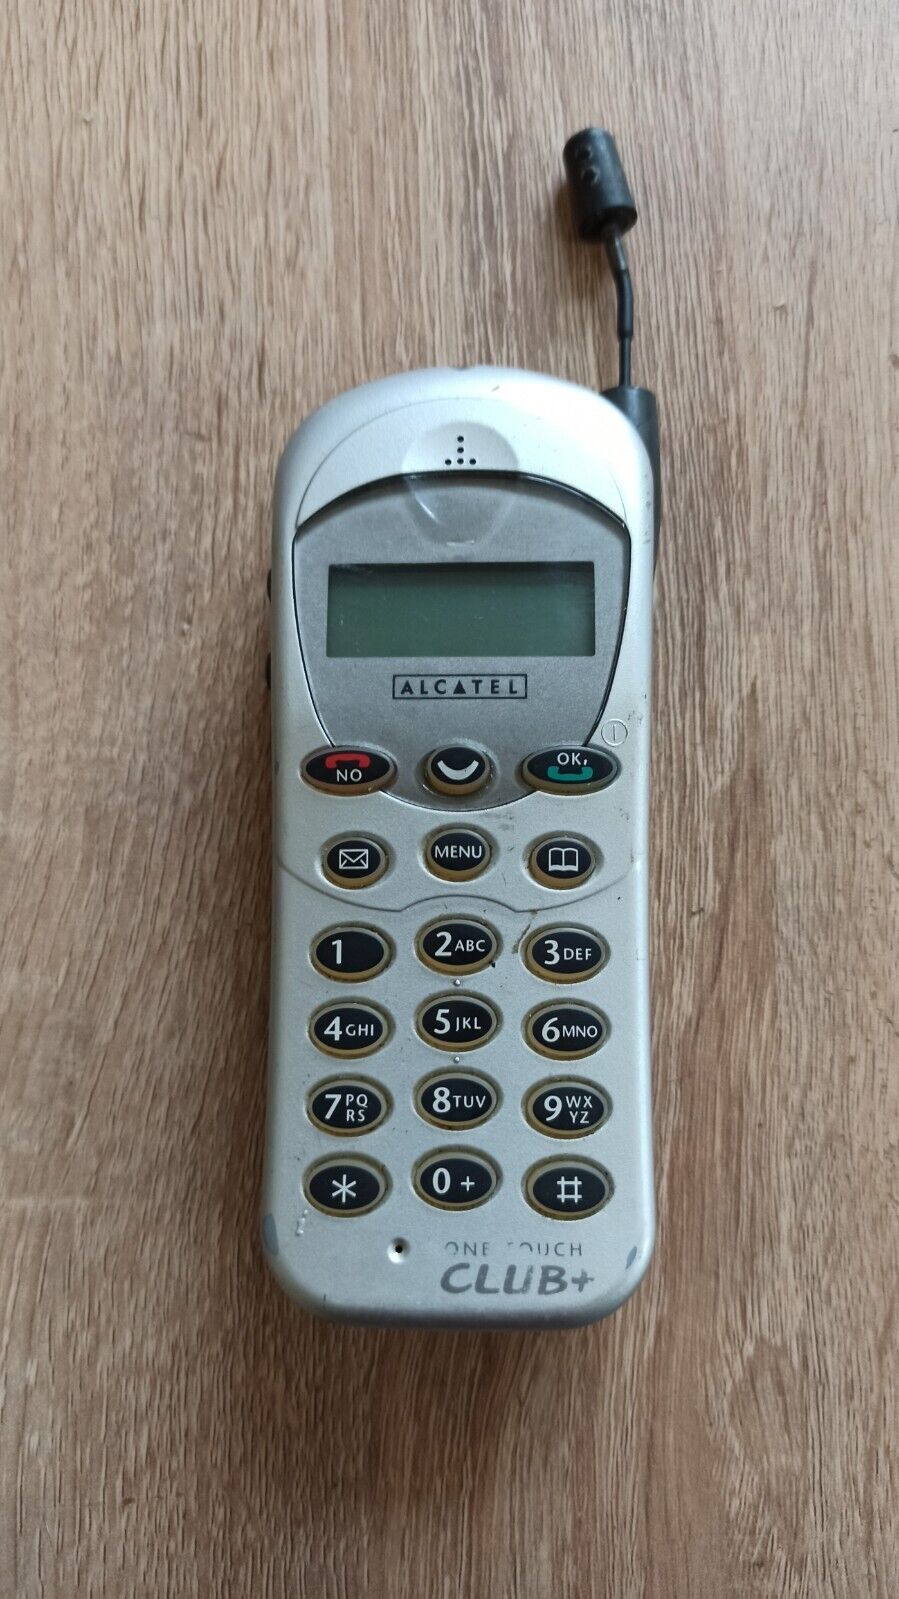 Vintage mobile phone Alcatel one touch club plas. 2000s